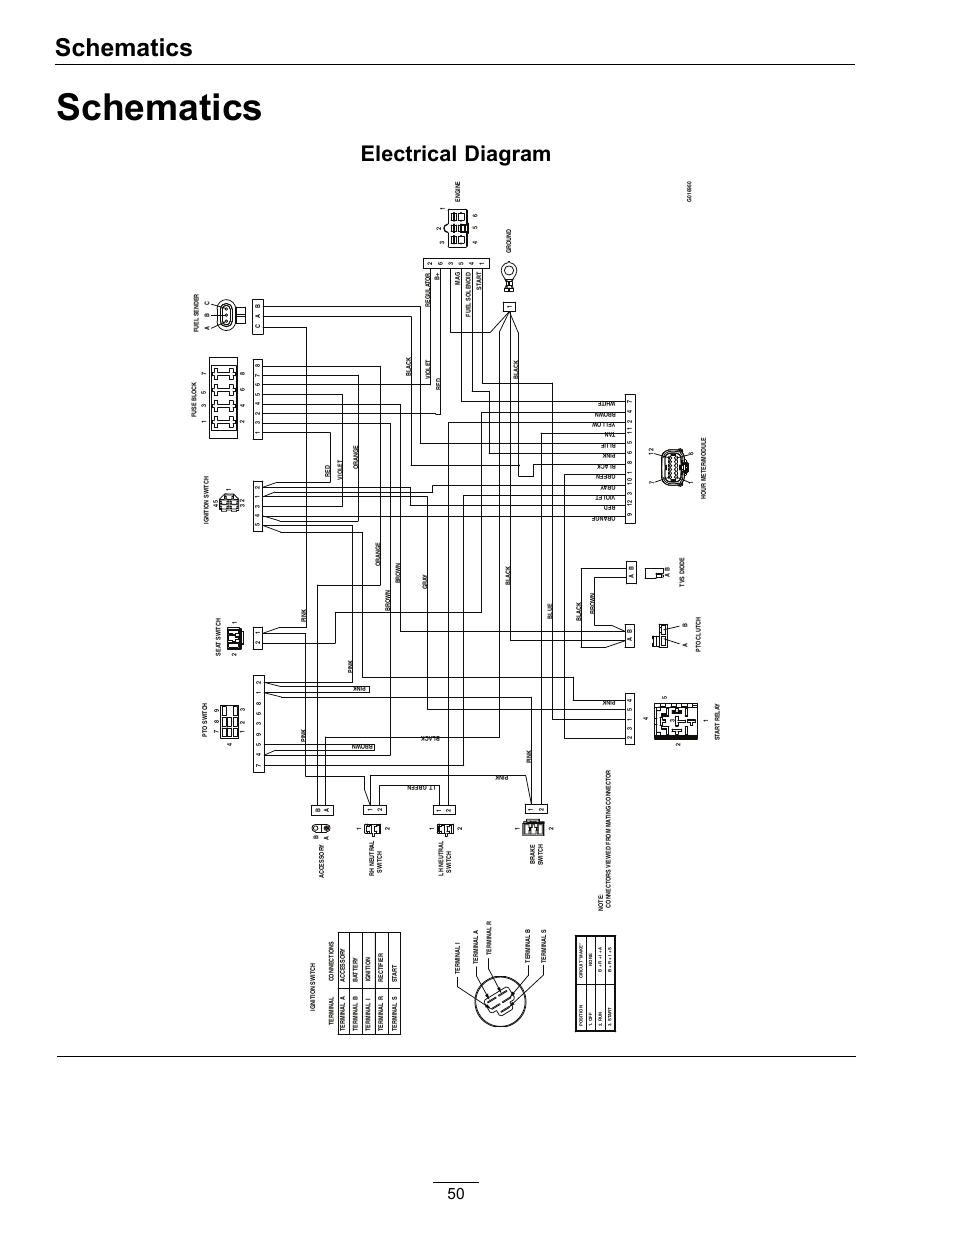 pixhawk 2.1 wiring diagram